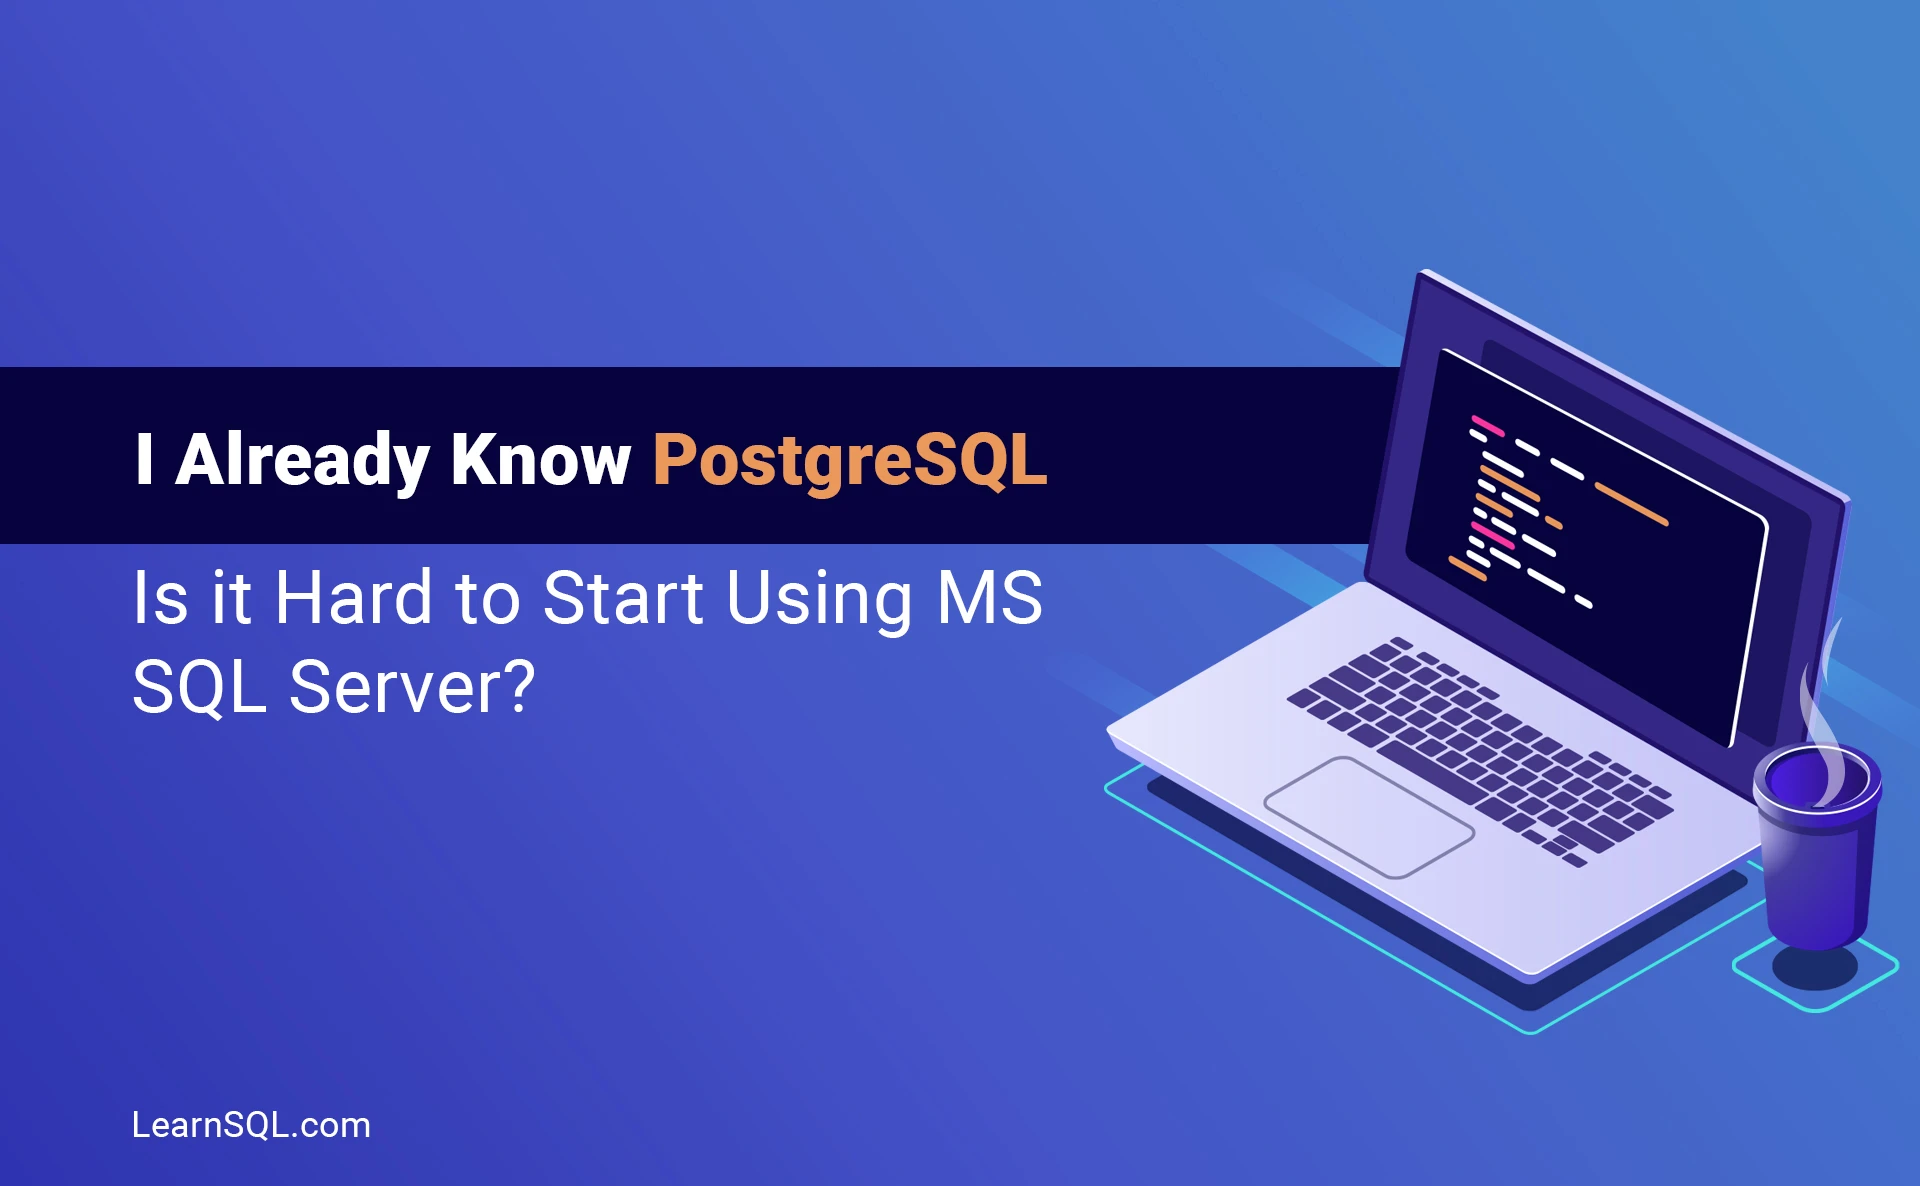 I Already Know PostgreSQL. Is it Hard to Start Using MS SQL Server?